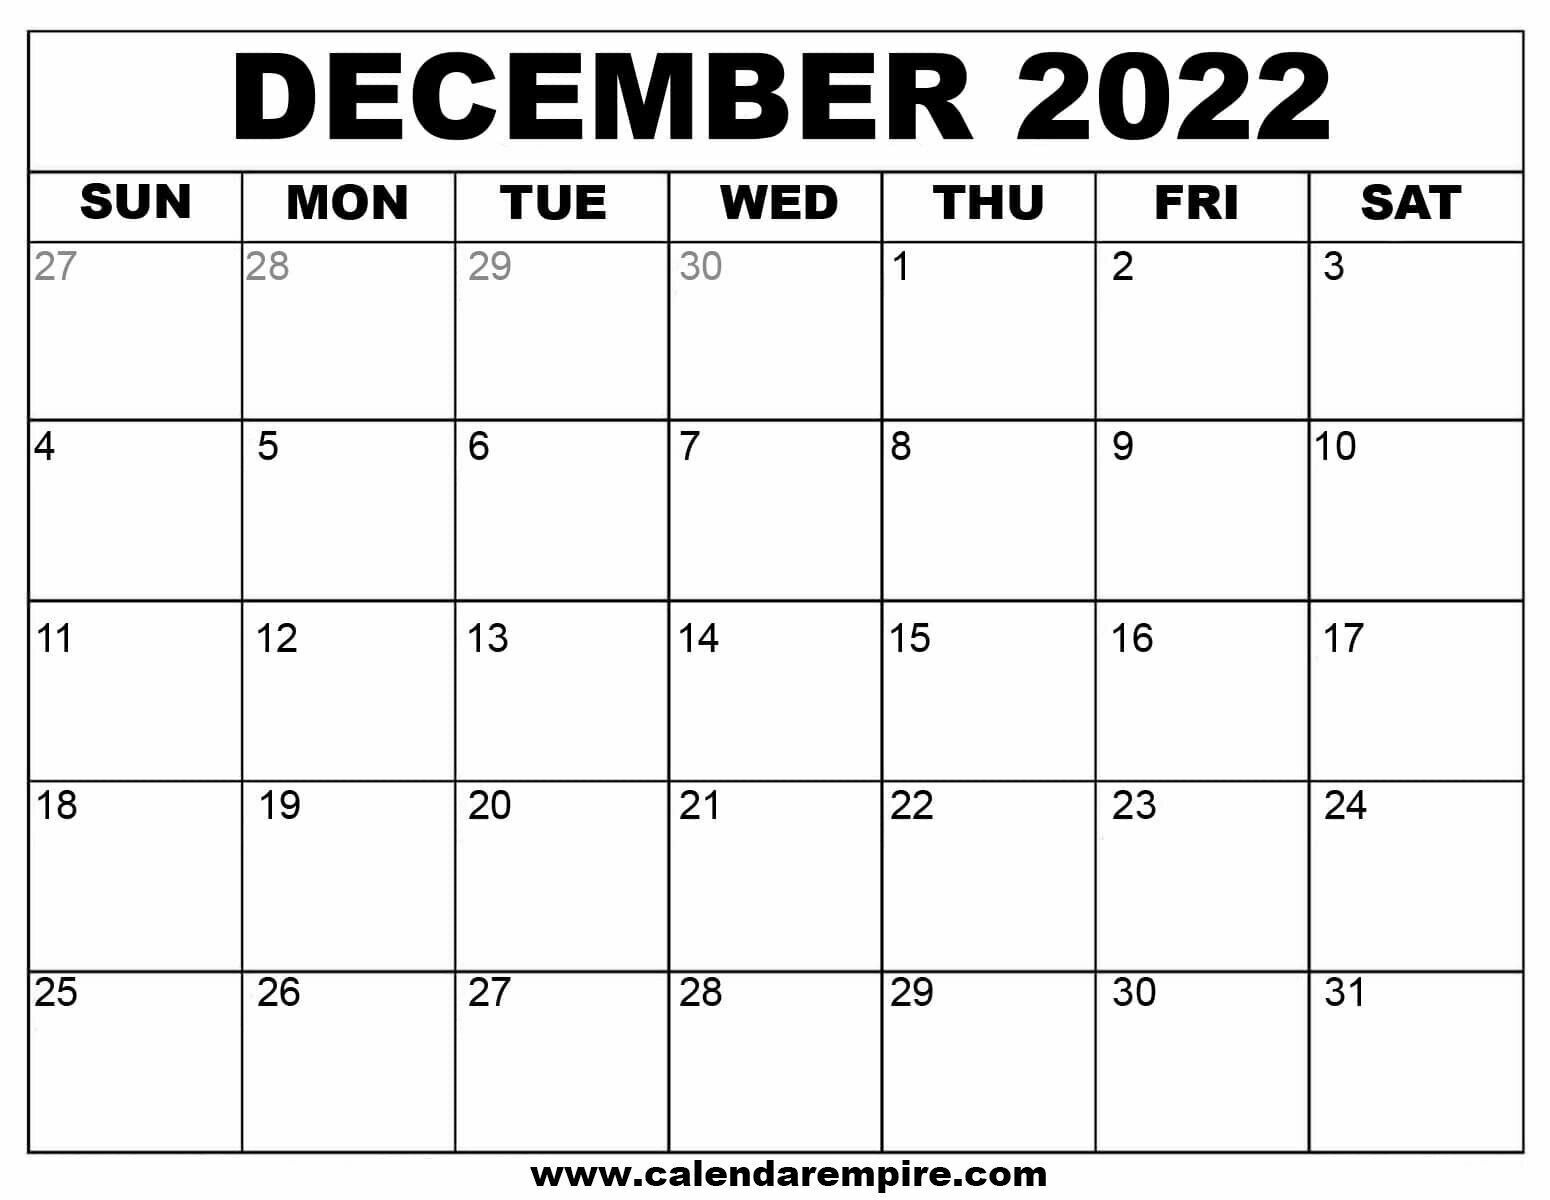 Avatar: December 2022 Calendar